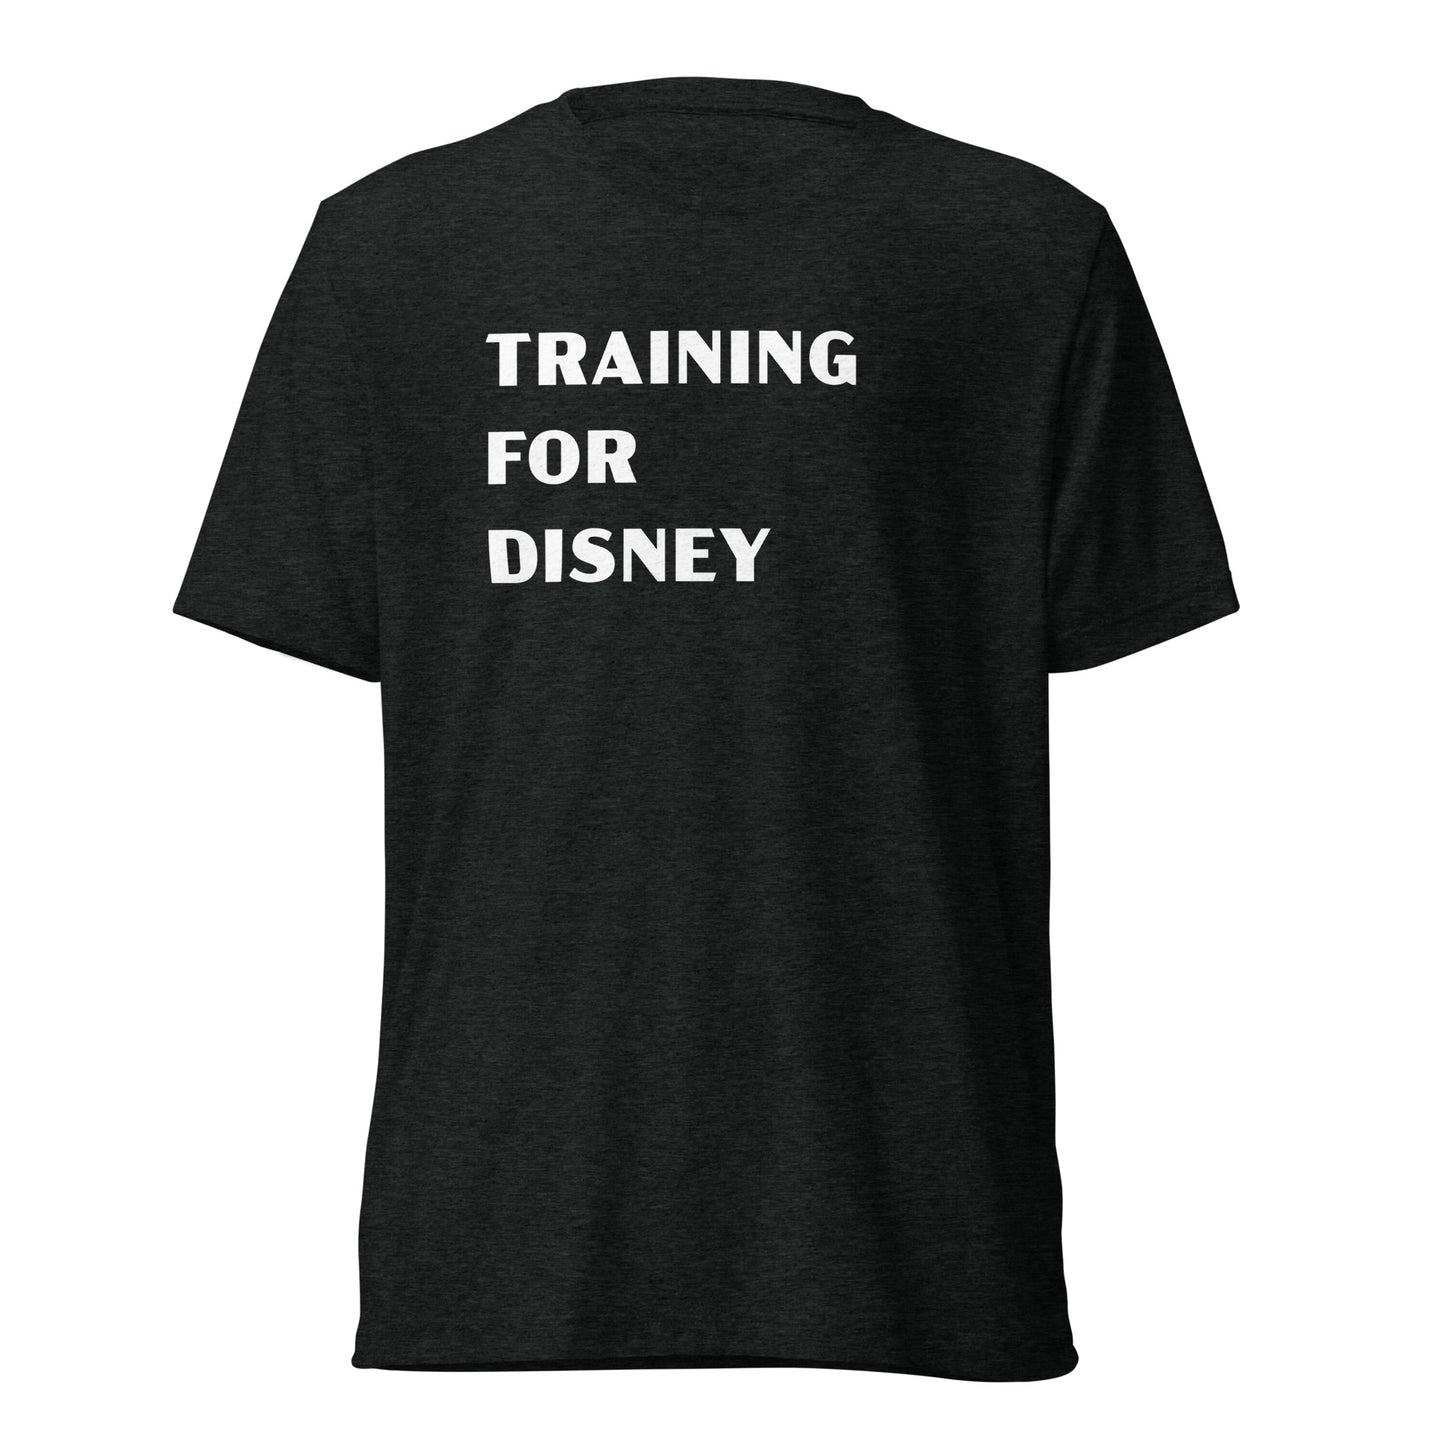 Premium Everyday Training For Disney Tee